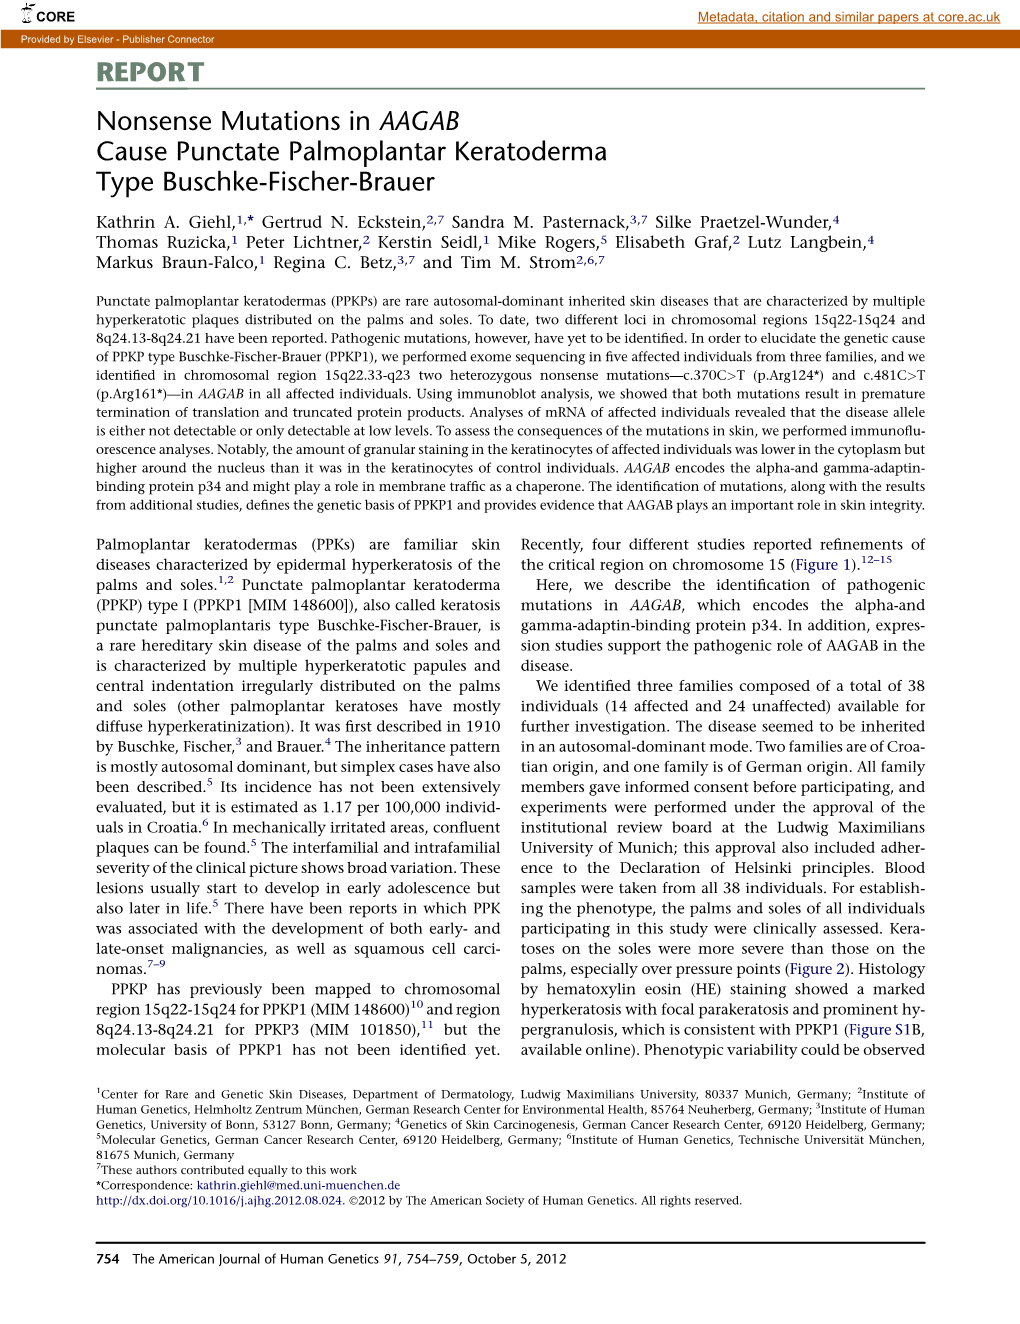 Nonsense Mutations in AAGAB Cause Punctate Palmoplantar Keratoderma Type Buschke-Fischer-Brauer